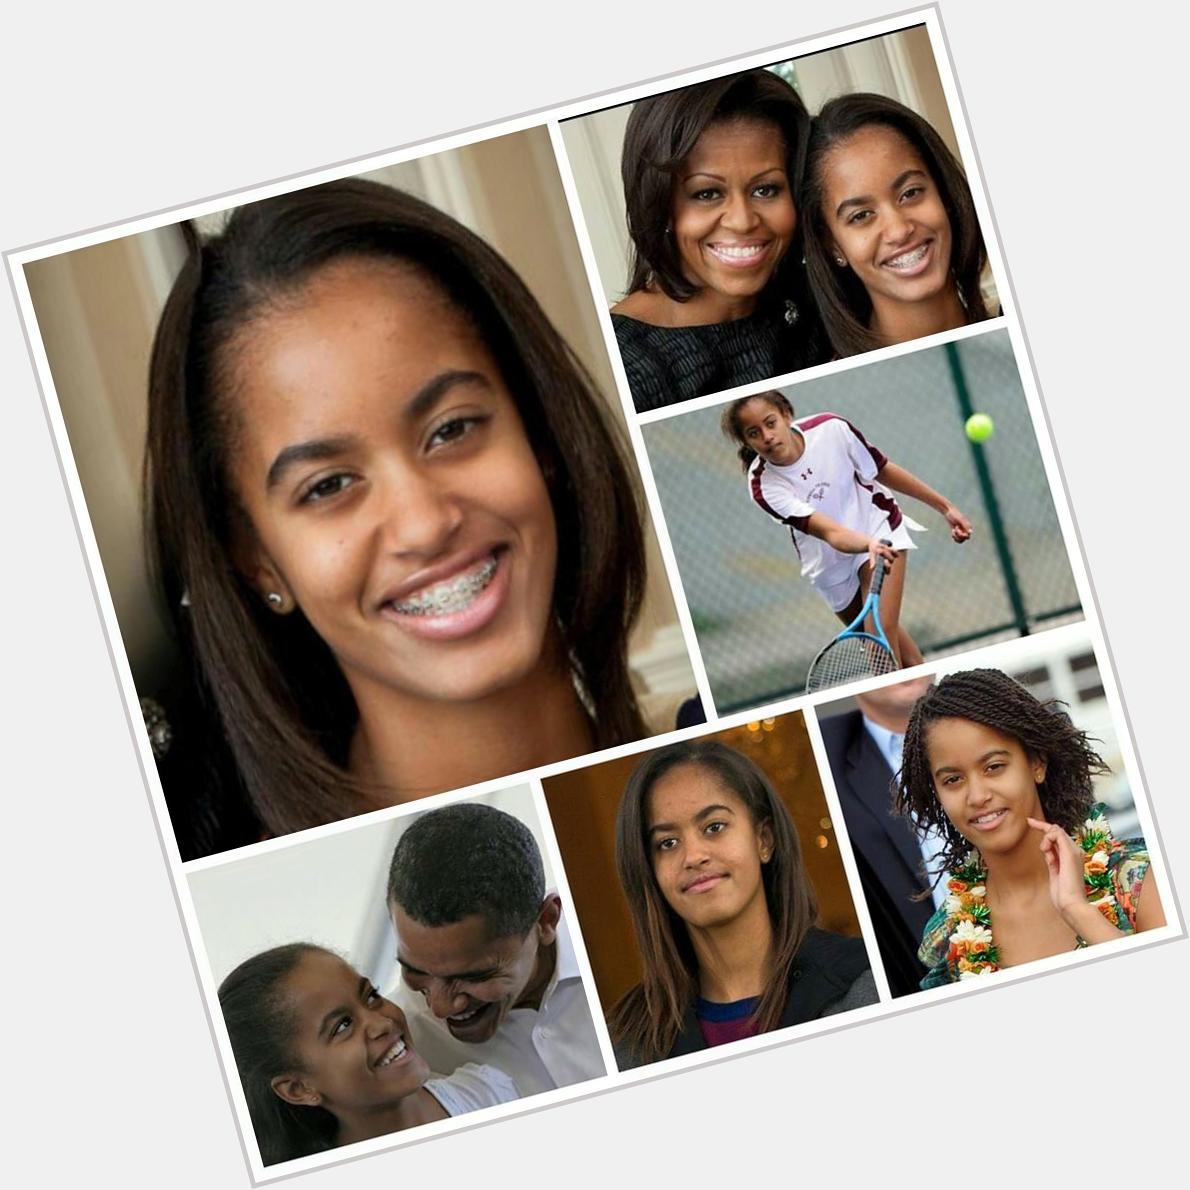 GEM Mentor Program would like to wish Malia Obama a Happy 17th Birthday!    